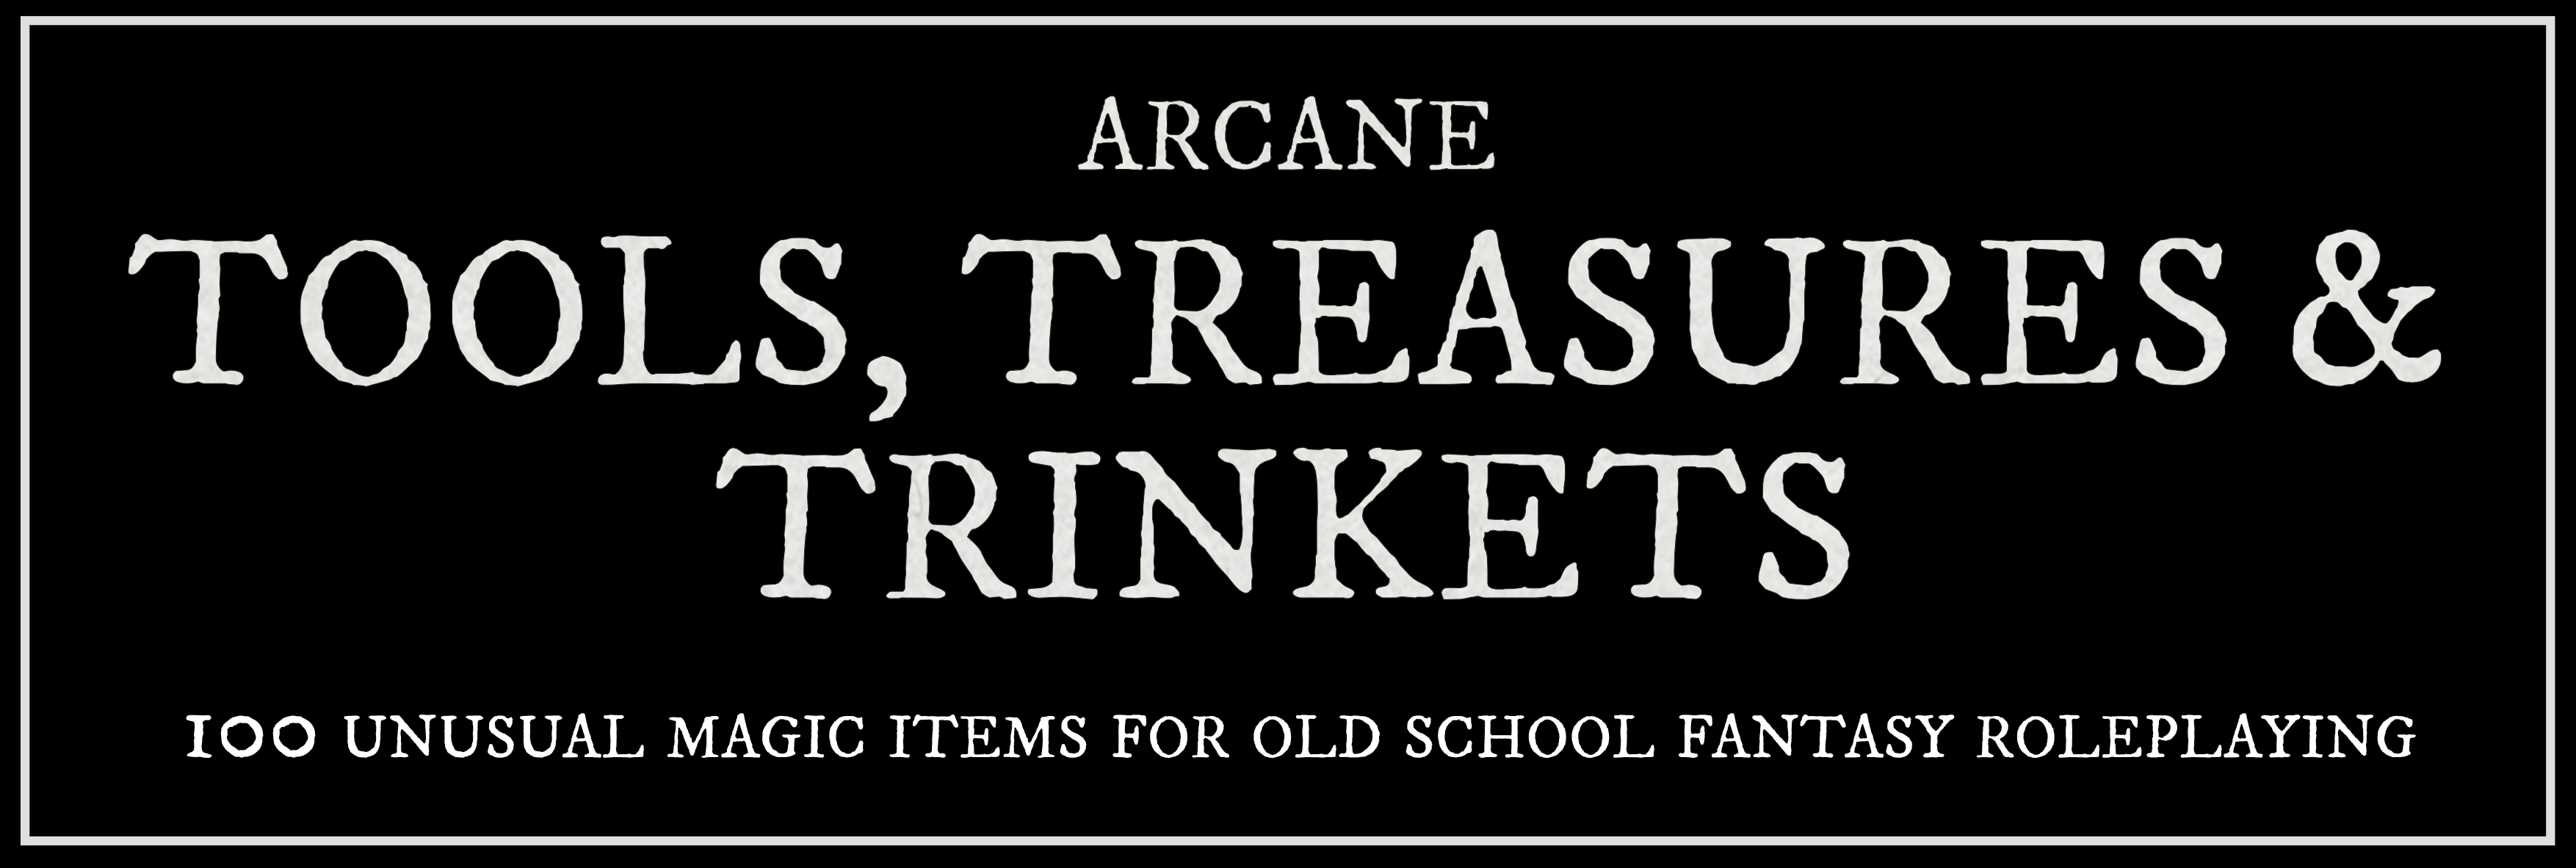 Arcane Tools, Treasures & Trinkets